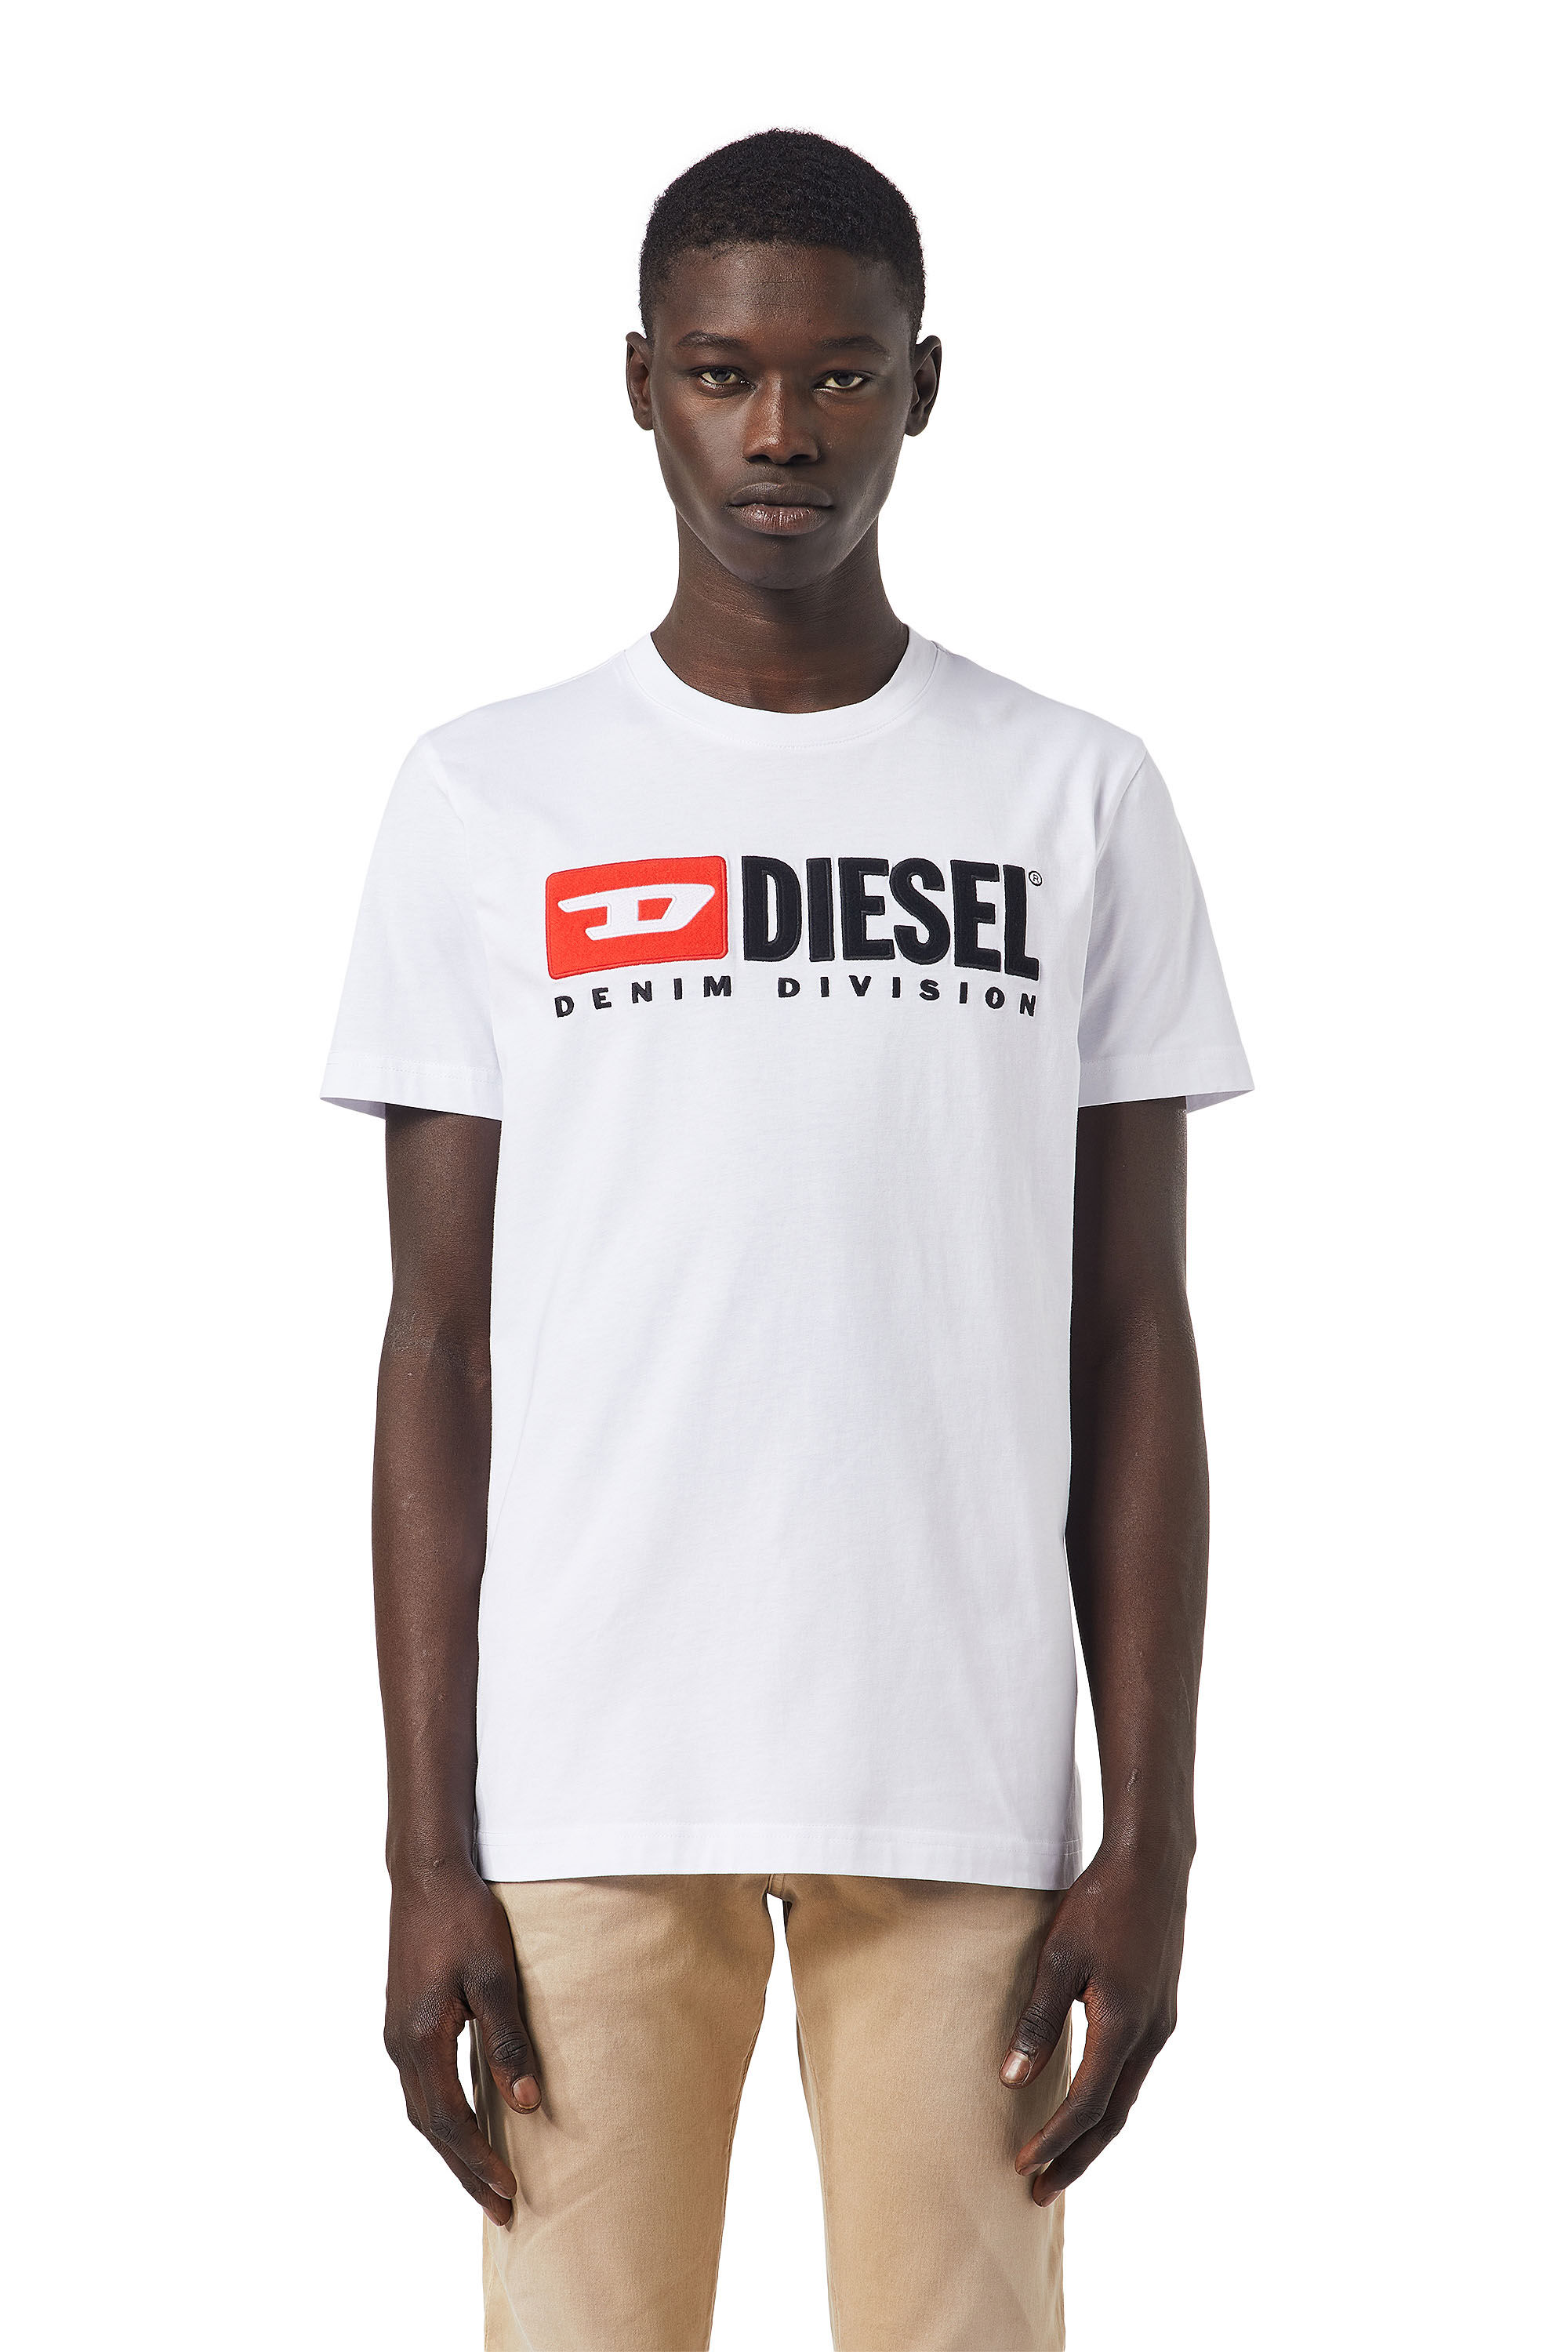 DIESEL Tシャツ T DIEGO QA T-SHIRT ホワイト L - Tシャツ/カットソー